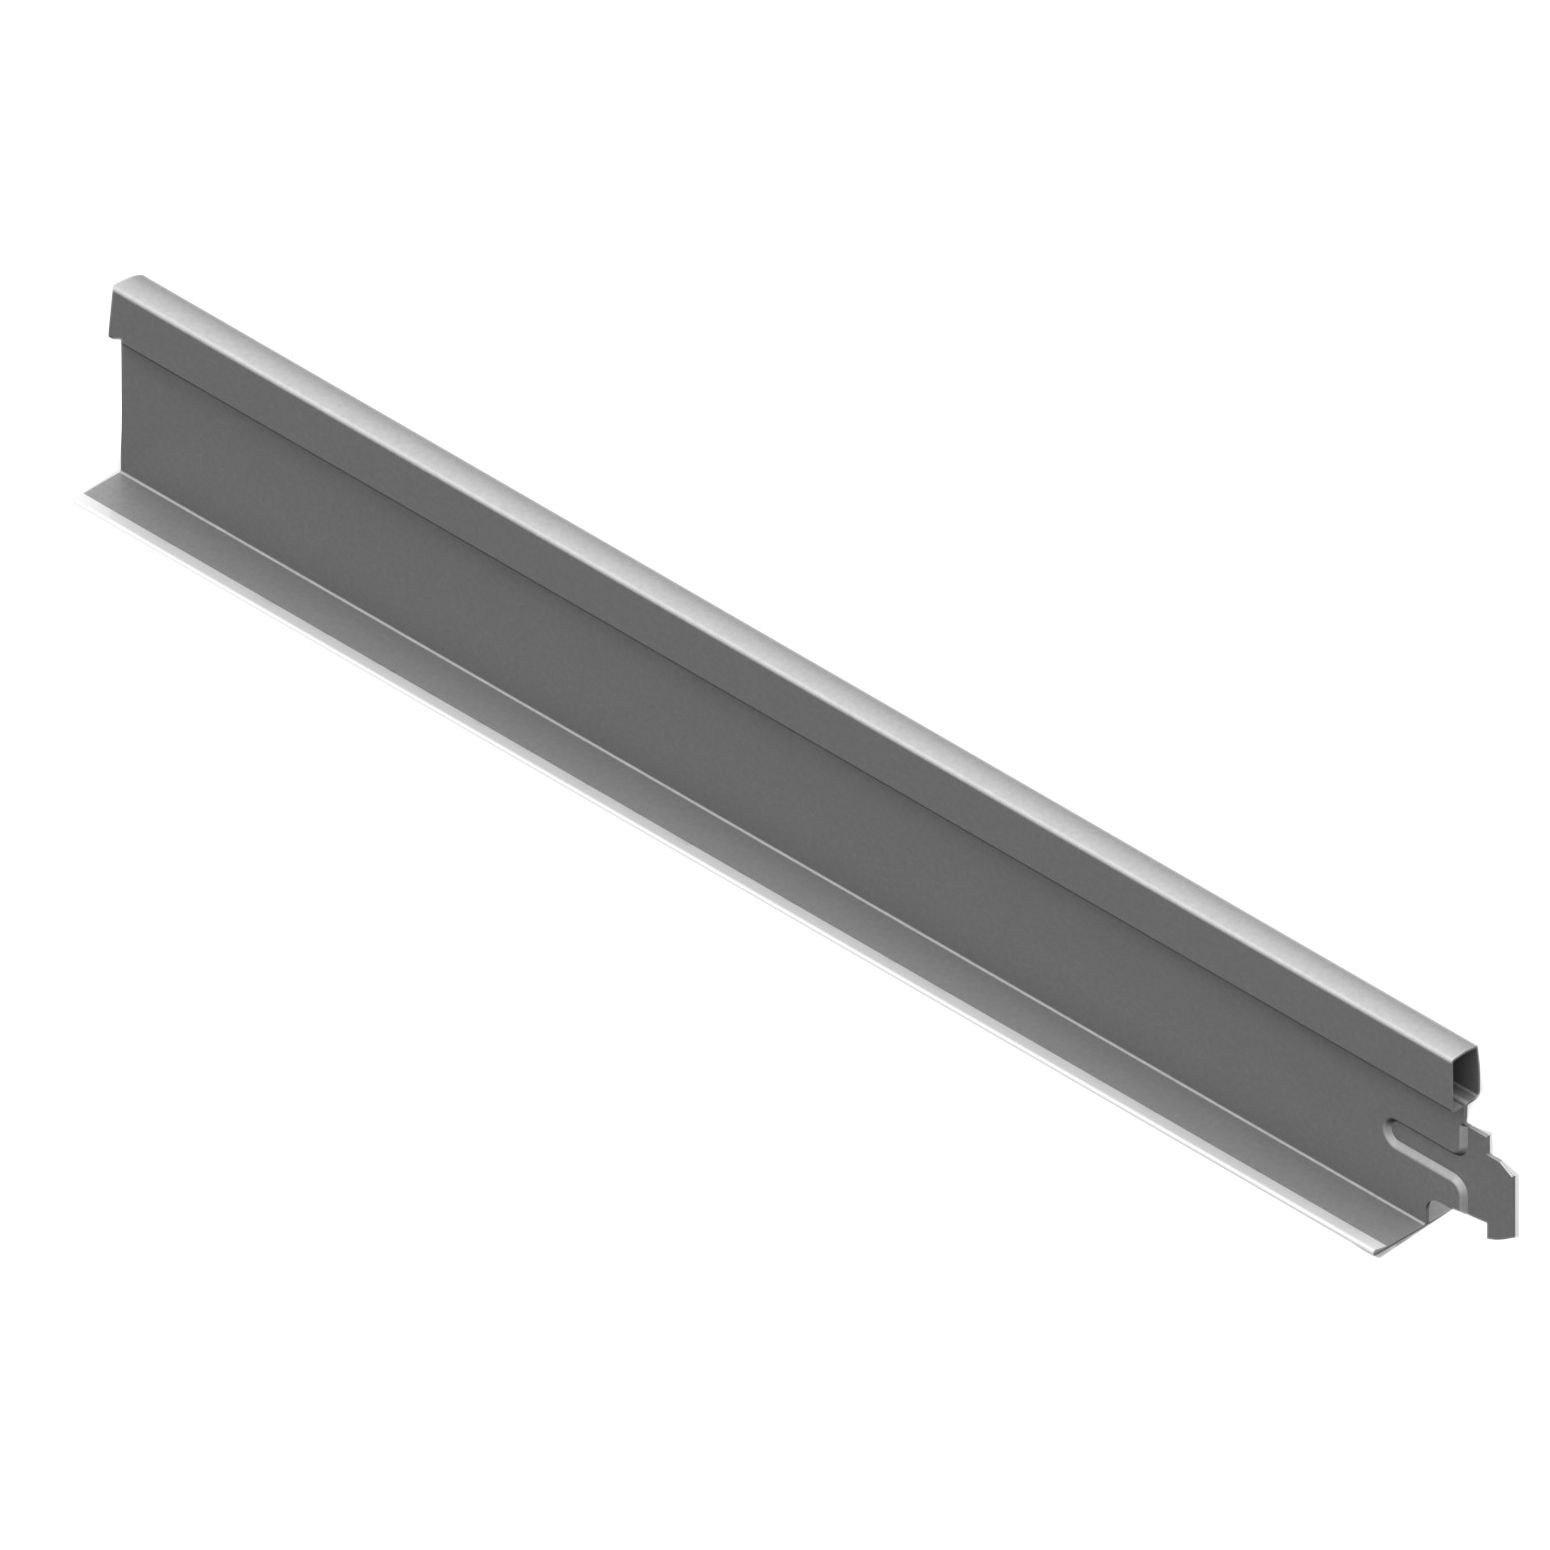 Accessories for cassette ceilings - Rigips Quick Lock 24 x 600 mm box ceiling divider profile, https:maxbau.ro